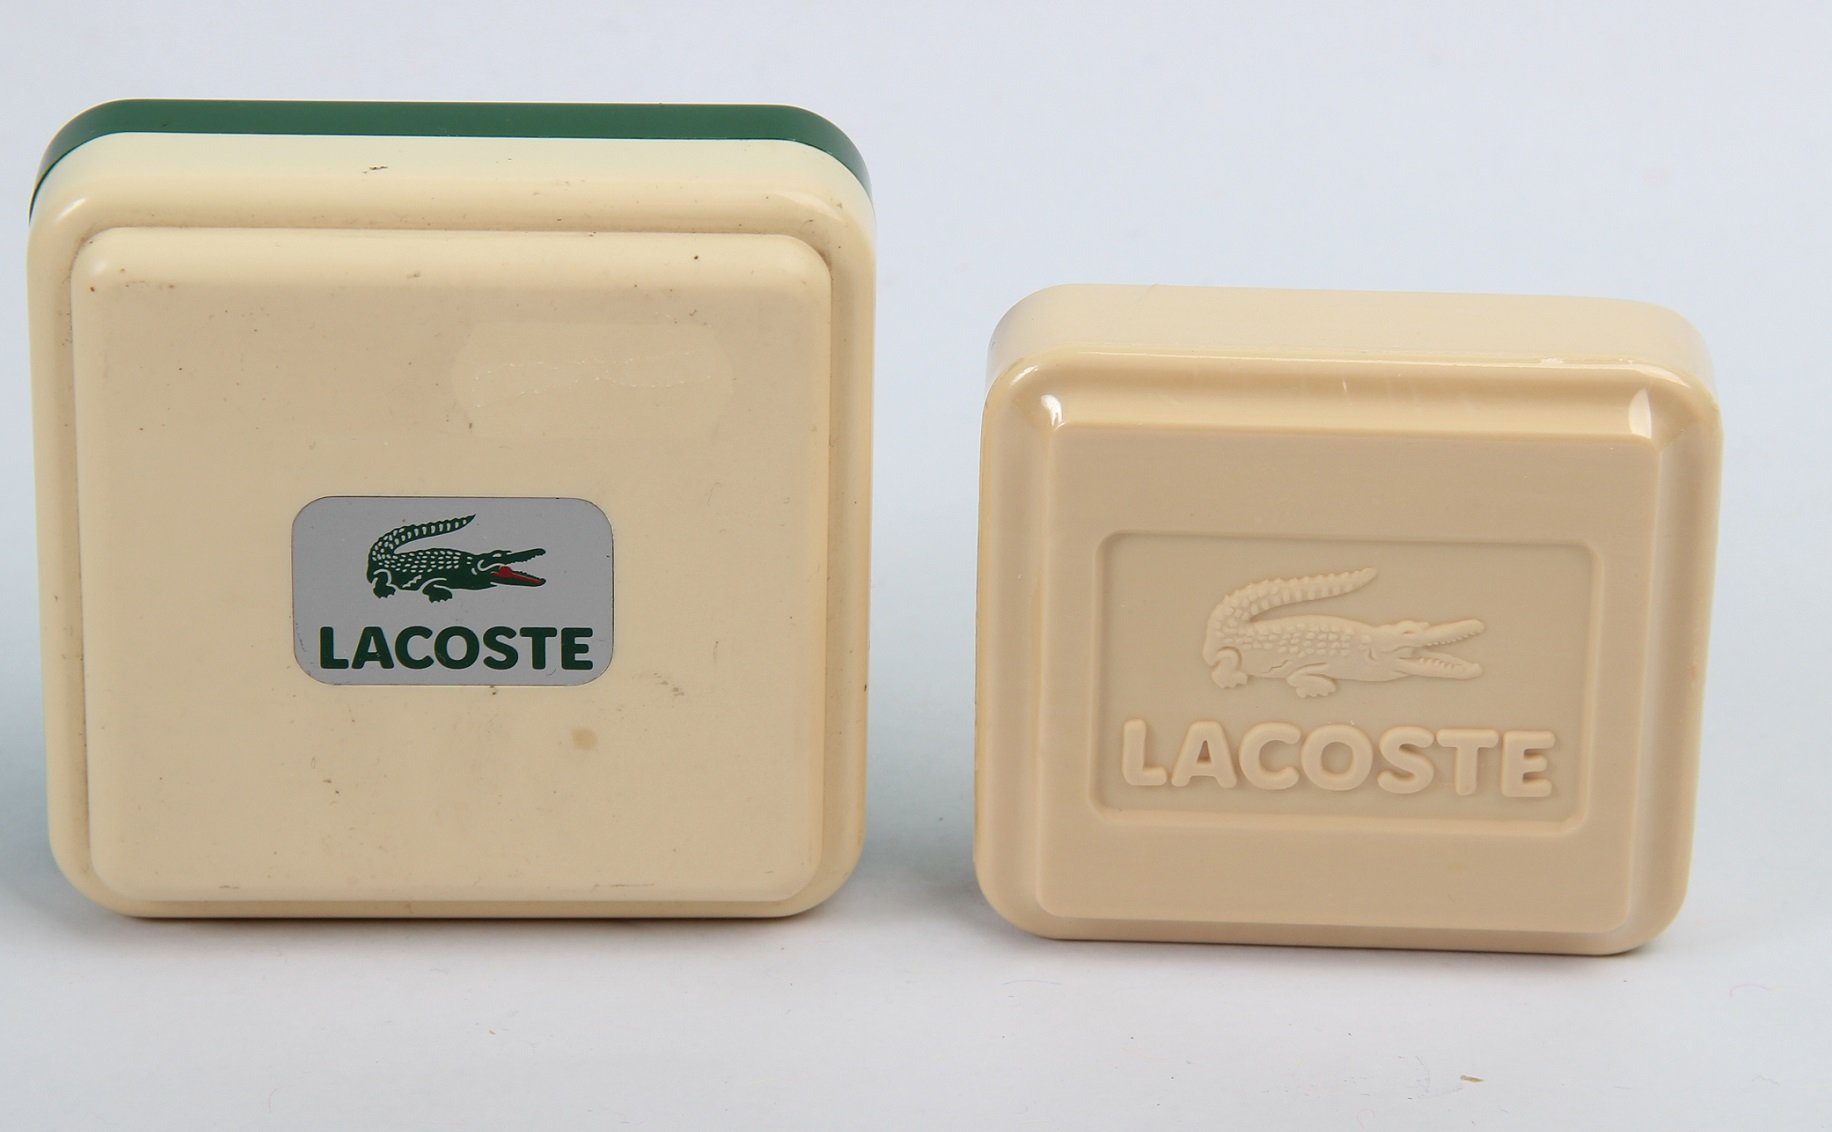 Seife savon Lacoste Original Lacoste / soap Handseife 100g